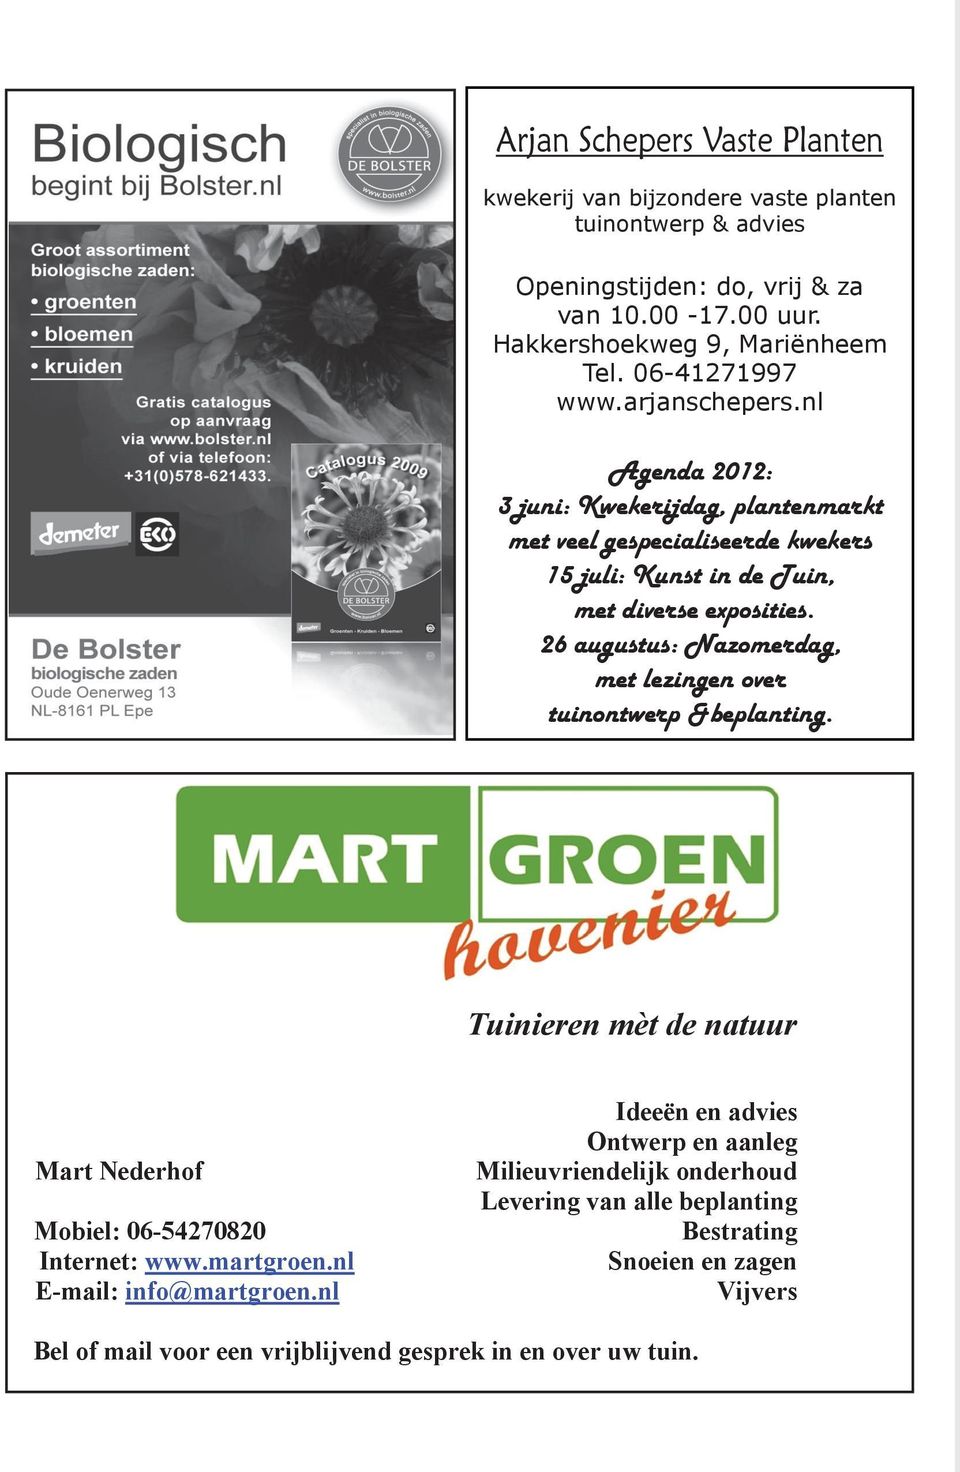 26 augustus: Nazomerdag, met lezingen over tuinontwerp &beplanting. Tuinieren mèt de natuur Mart Nederhof Mobiel: 06-54270820 Internet: www.martgroen.nl E-mail: info@martgroen.